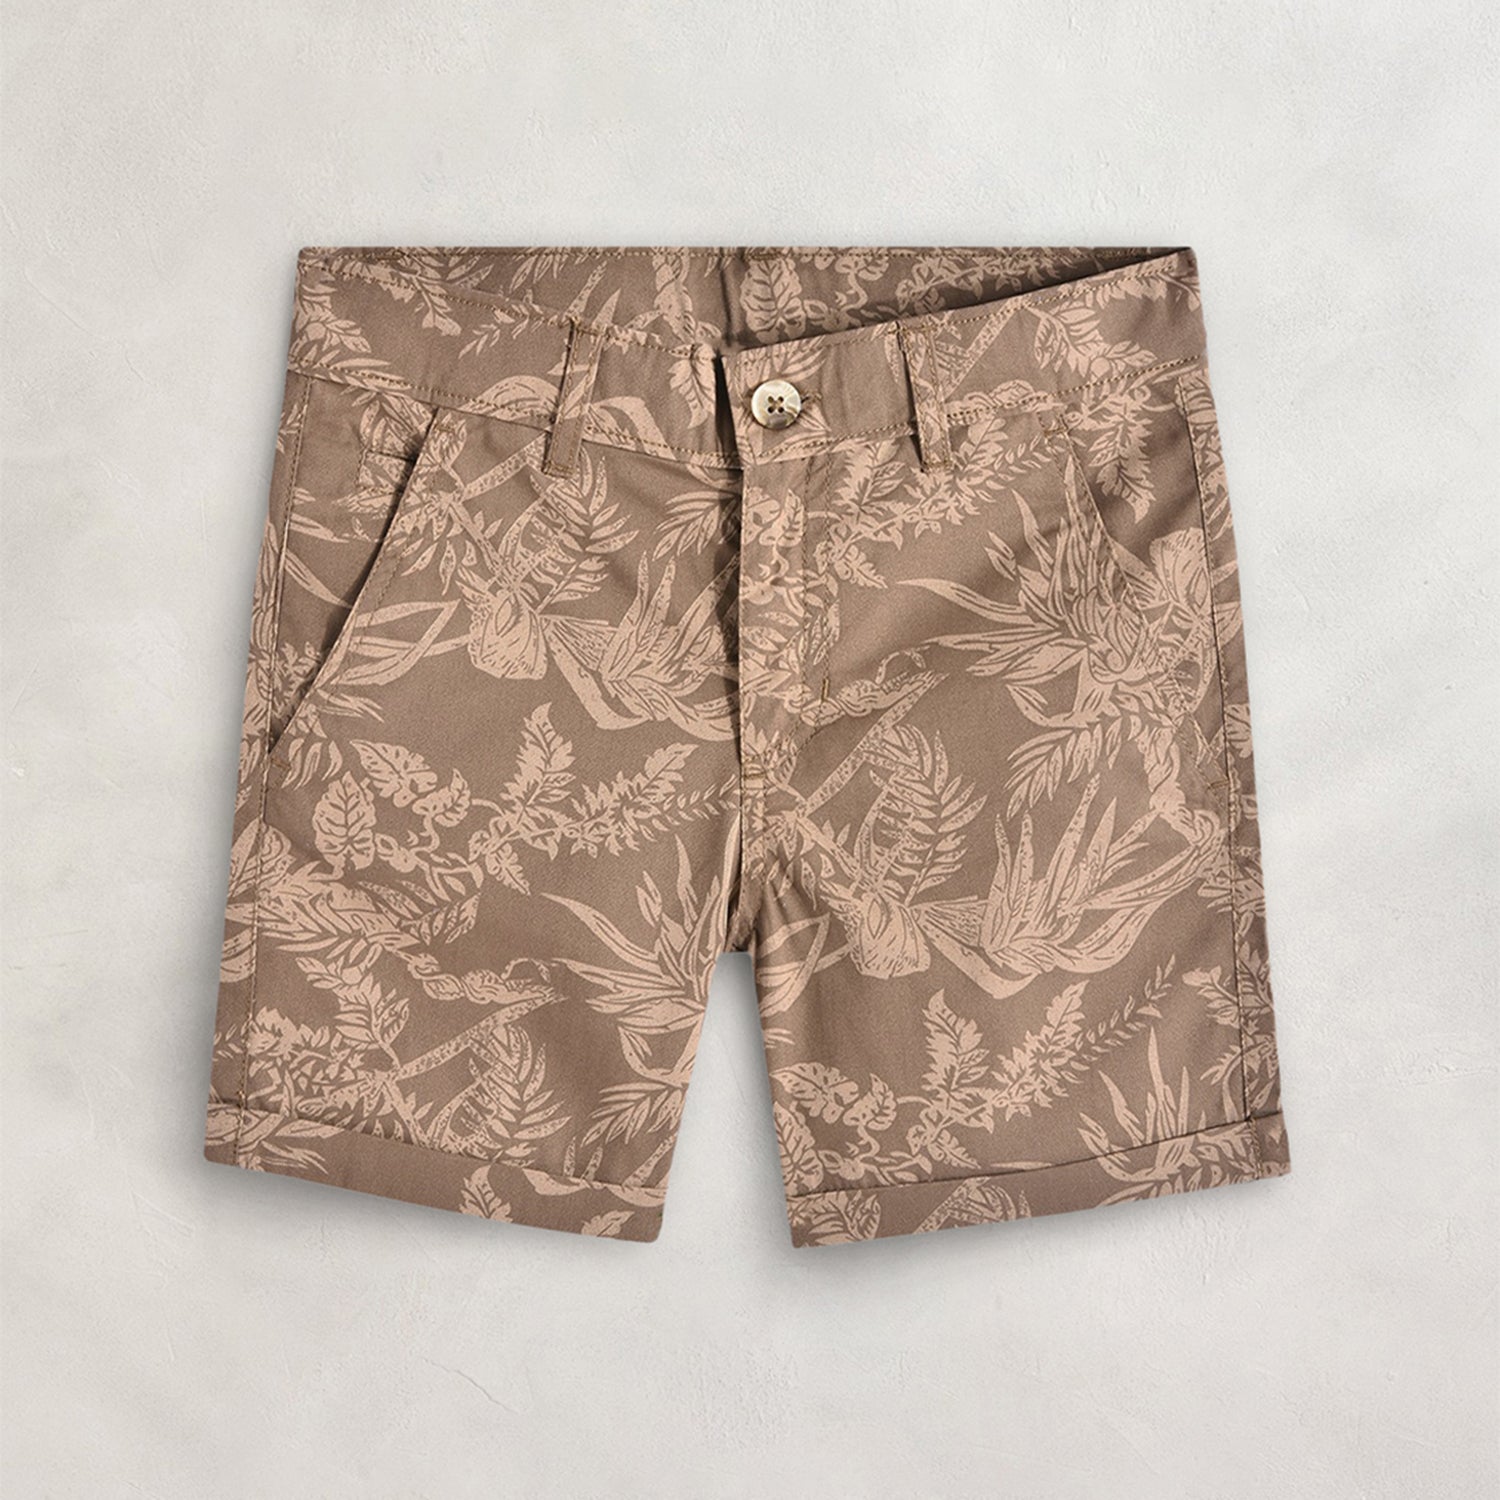 Island Shorts